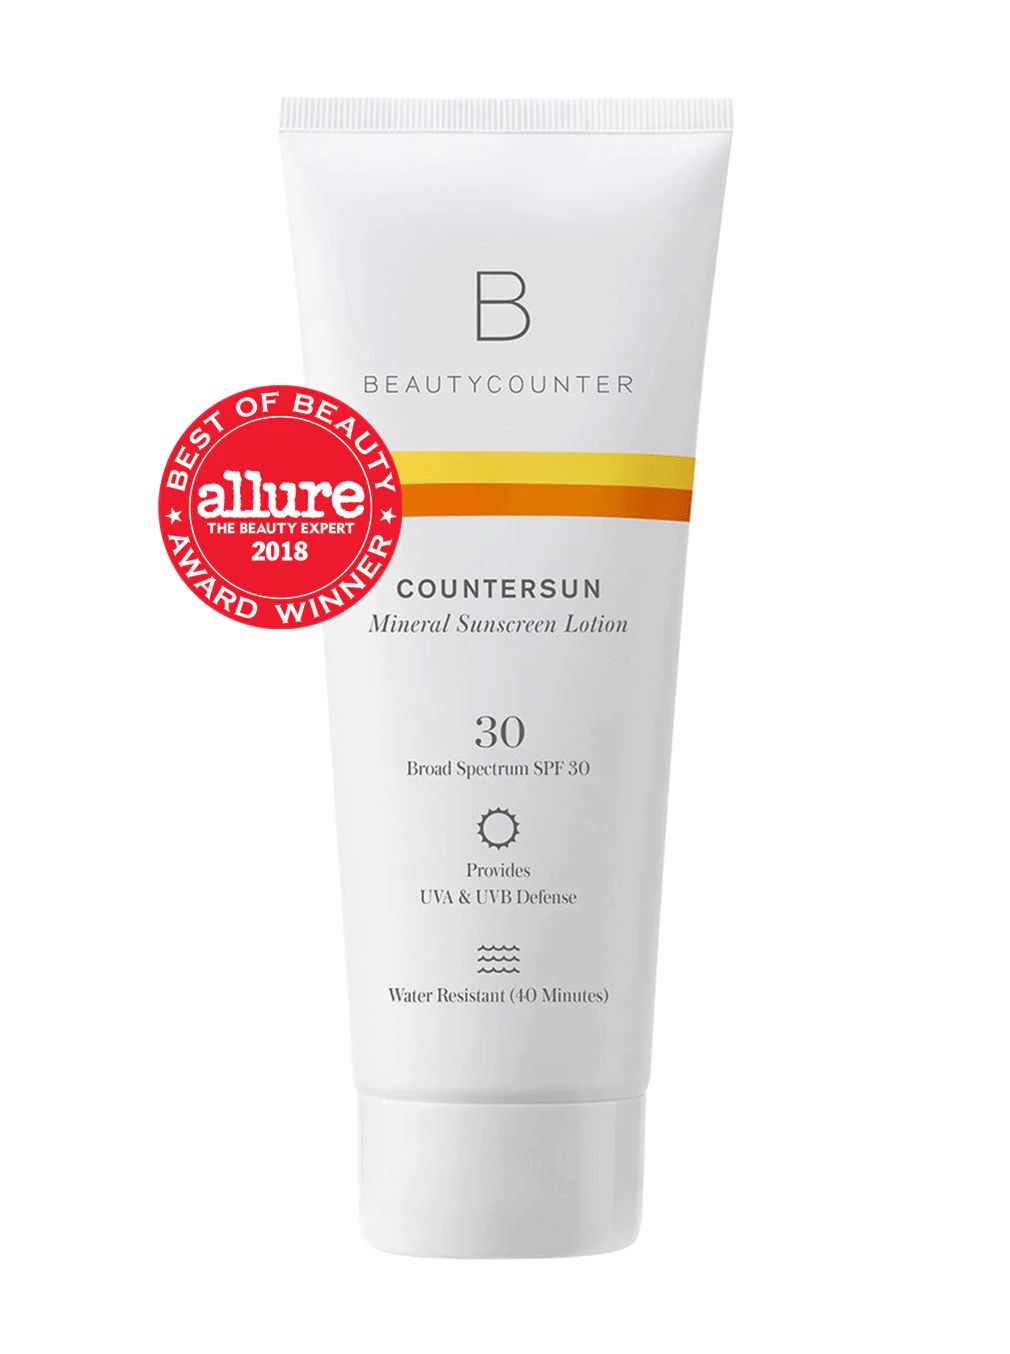 Countersun Mineral Sunscreen Lotion SPF 30 – 6.7 oz. | Beautycounter.com